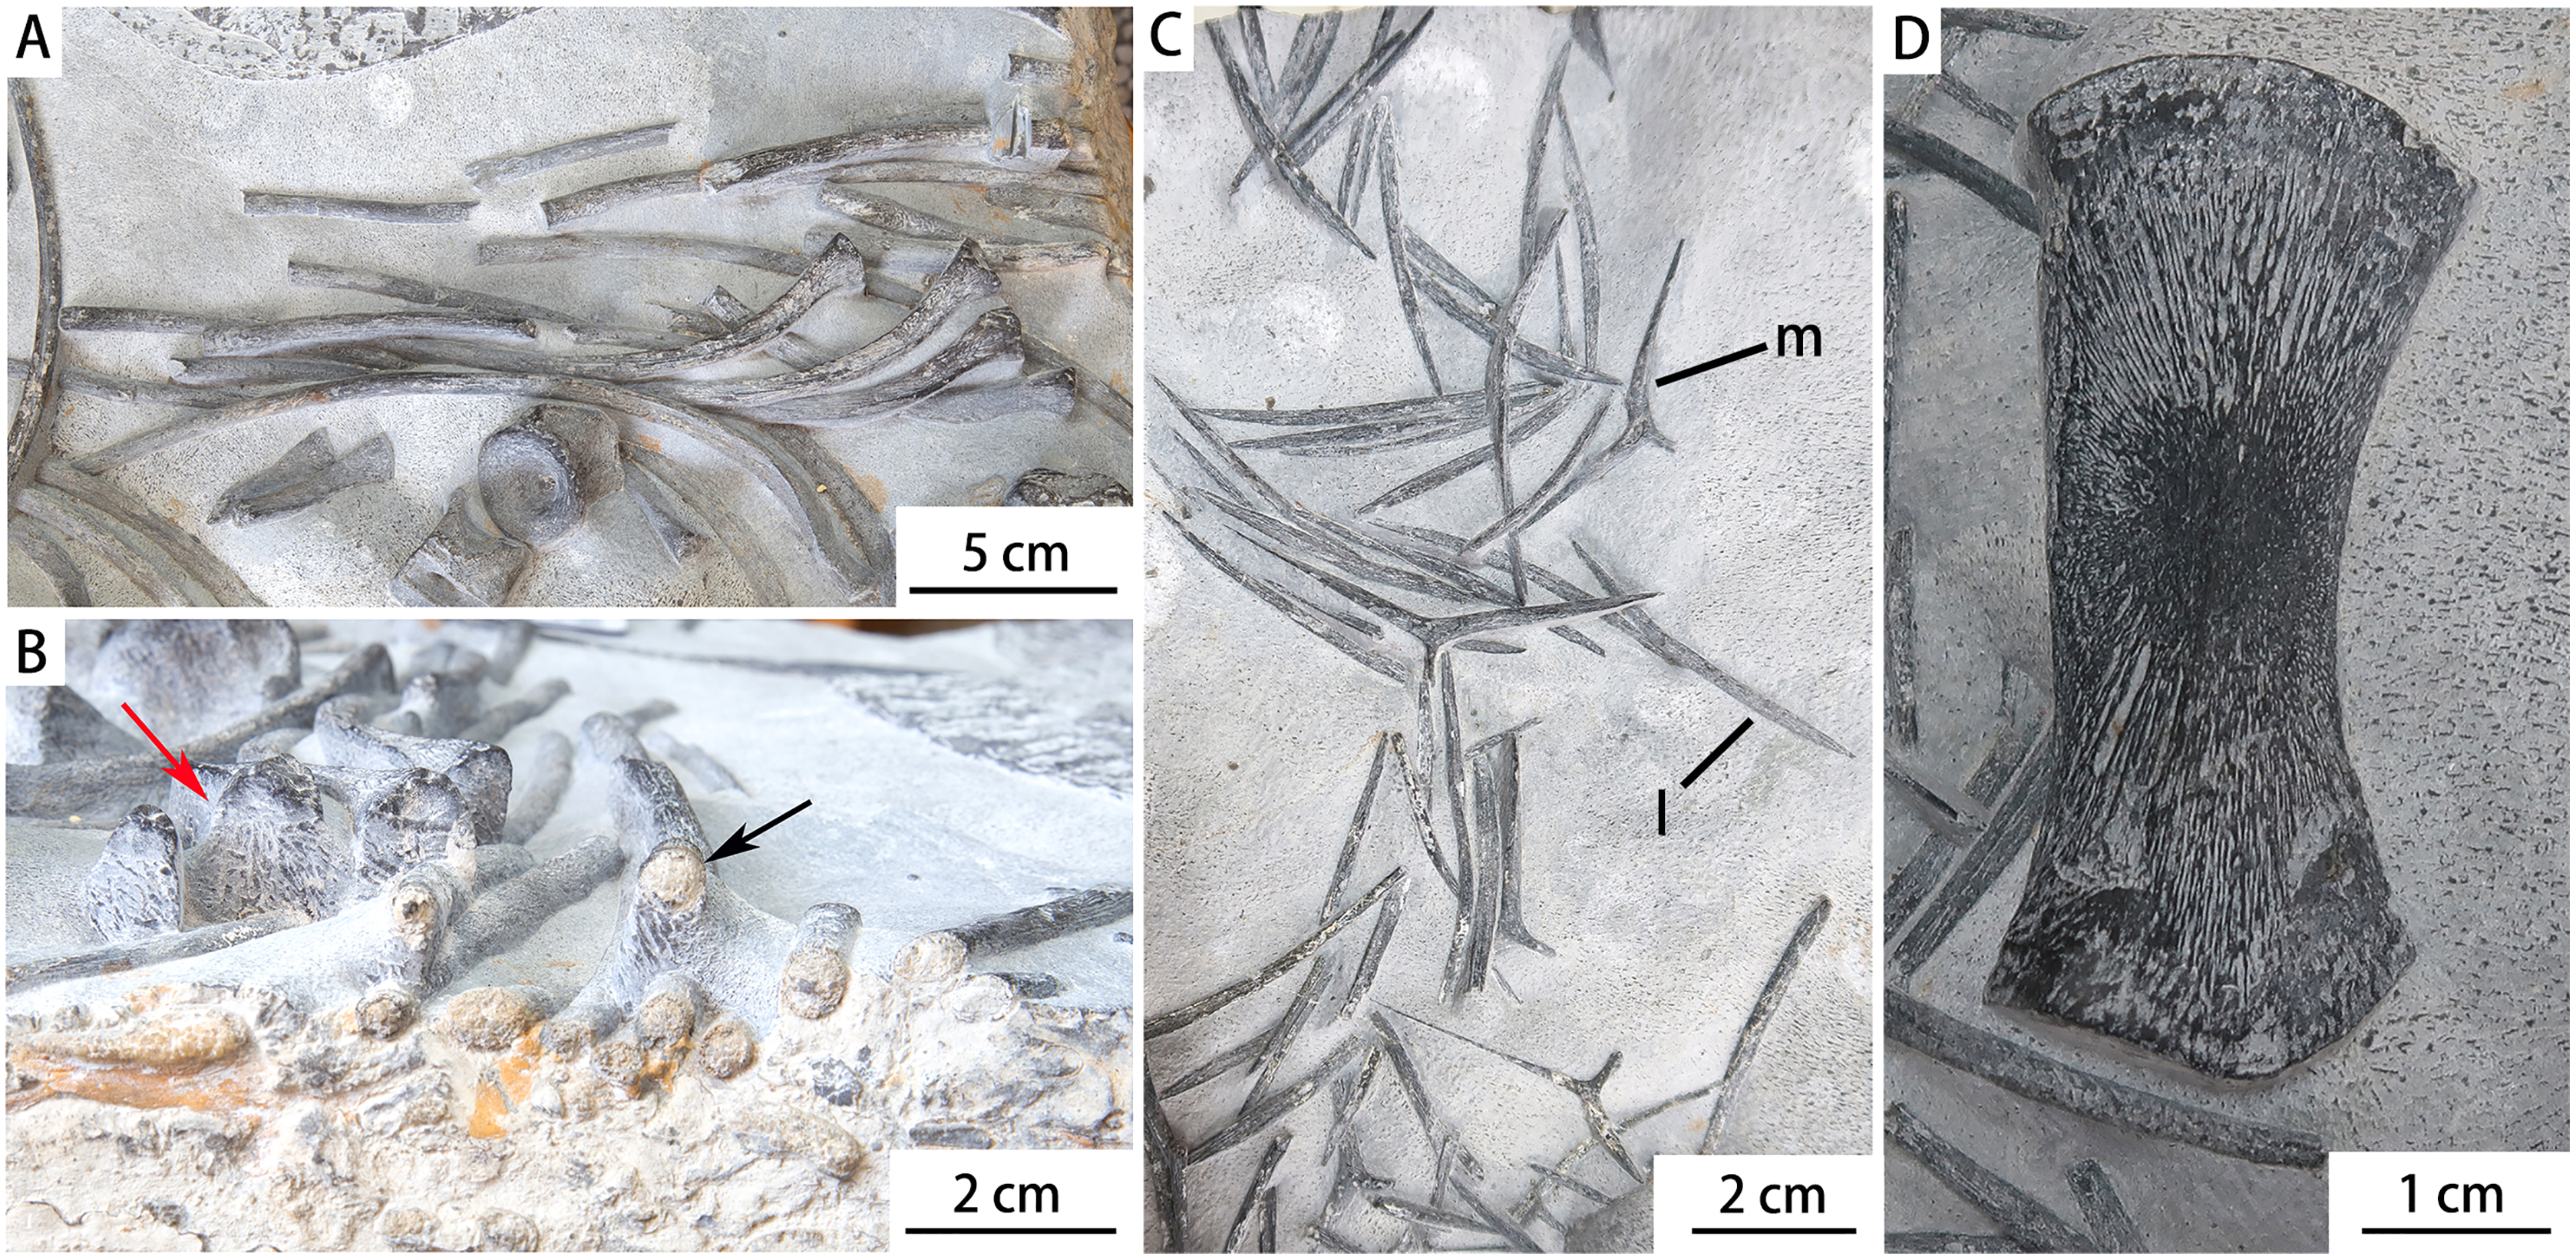 A new basal ichthyosauromorph from the Lower Triassic (Olenekian) of Zhebao, Guangxi Autonomous Region, South China [PeerJ]